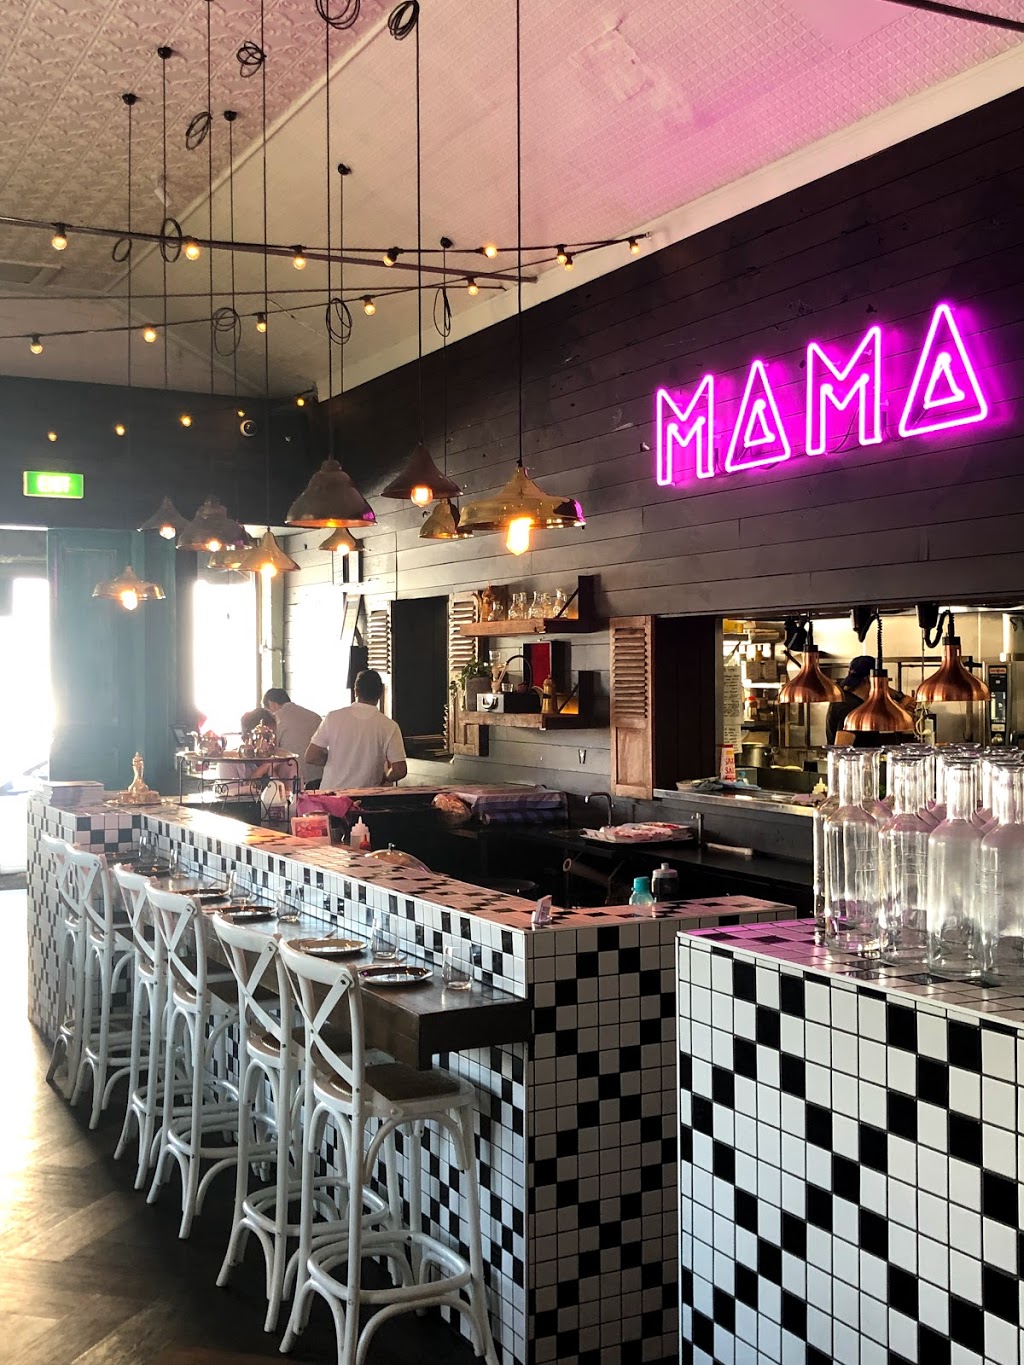 Mama Manoush | restaurant | 175-177 Lygon St, Brunswick East VIC 3057, Australia | 0393810898 OR +61 3 9381 0898